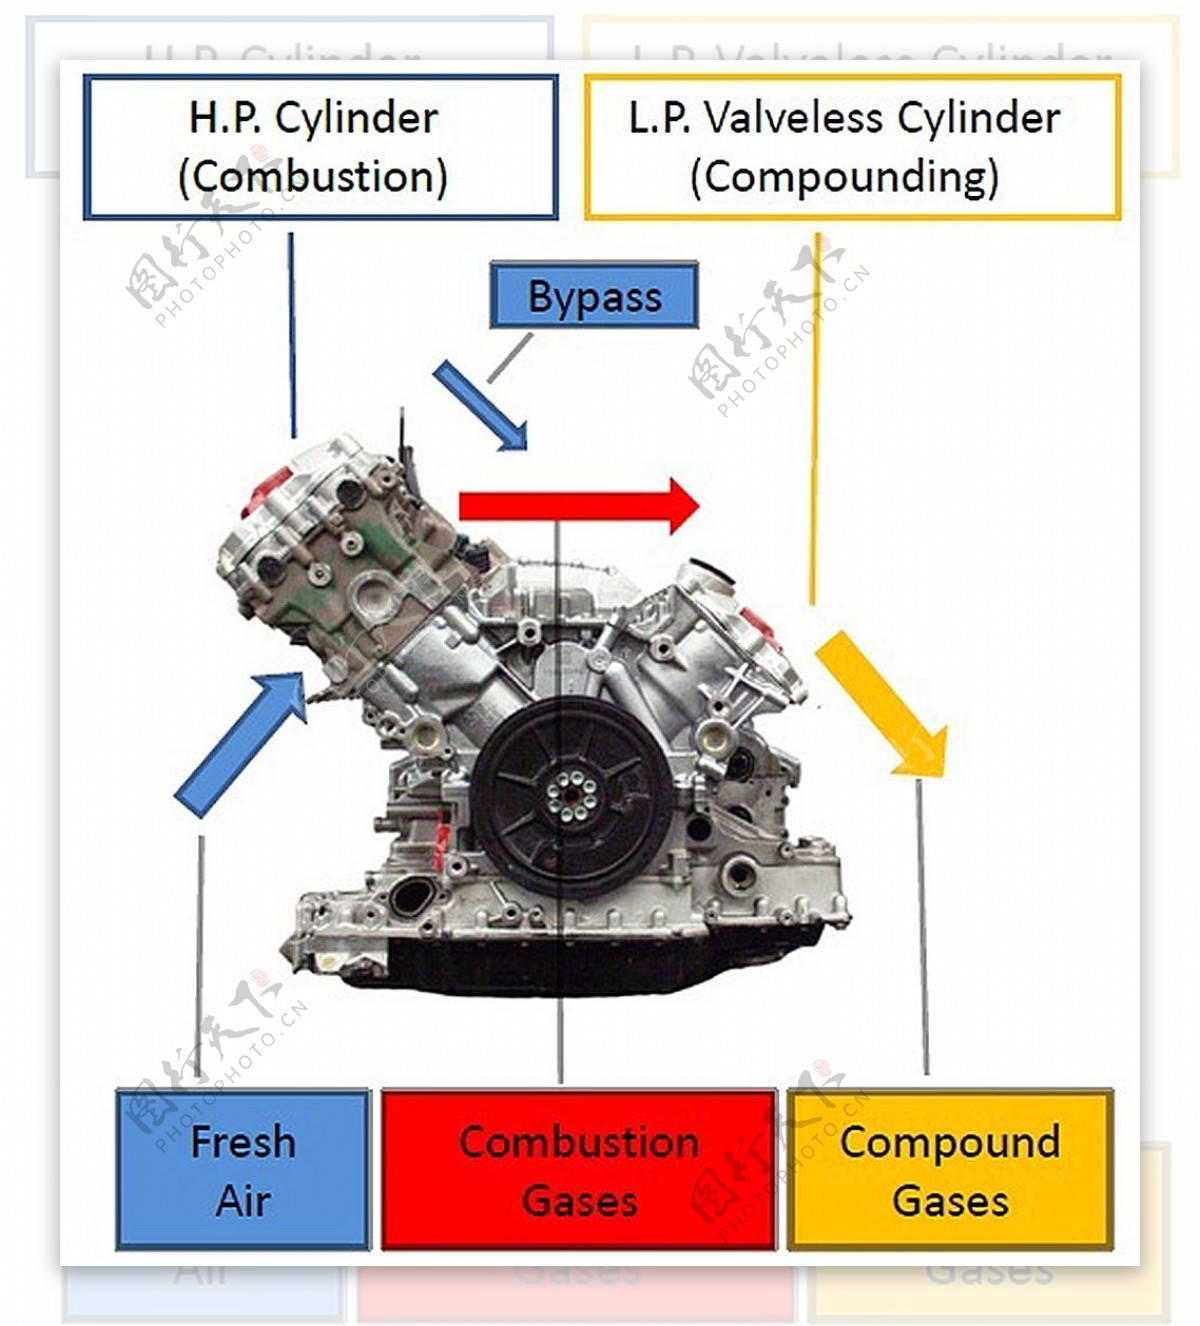 V8复合发动机一高效率低成本的发动机方案